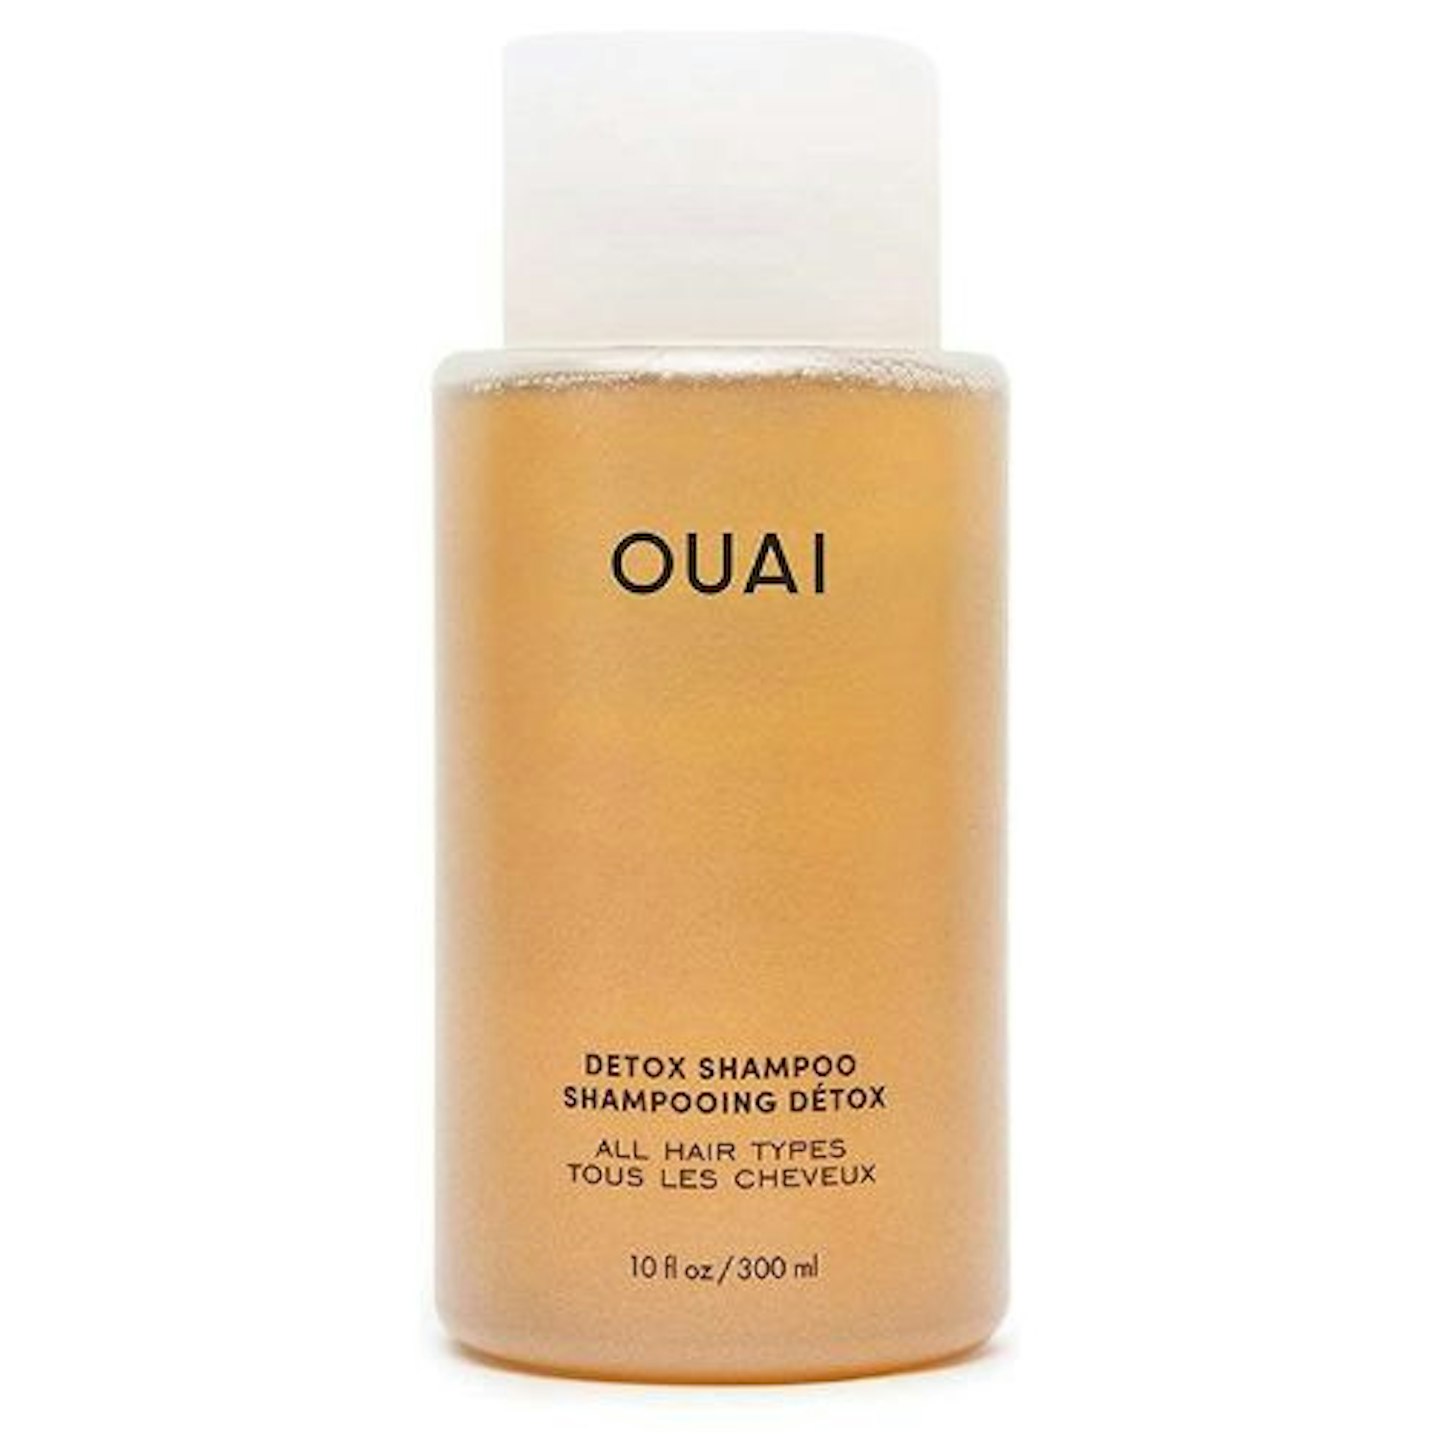 OUAI Detox Shampoo Clarifying Cleanse